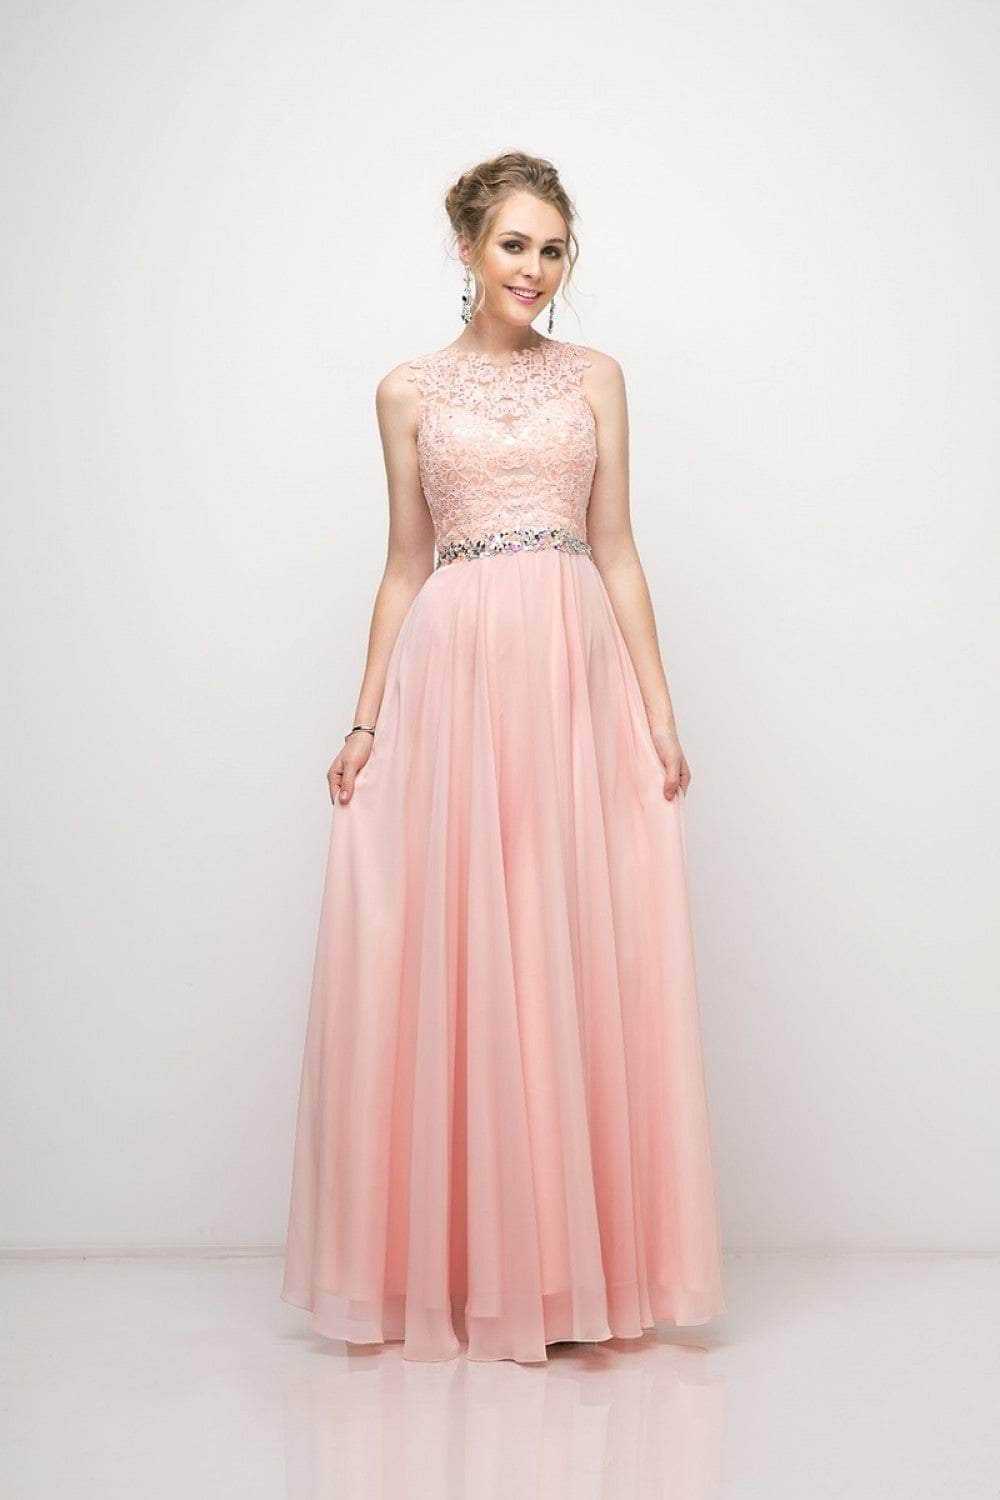 Ladivine, Ladivine B1601 - Adorned Belt Lace A-Line Chiffon Dress